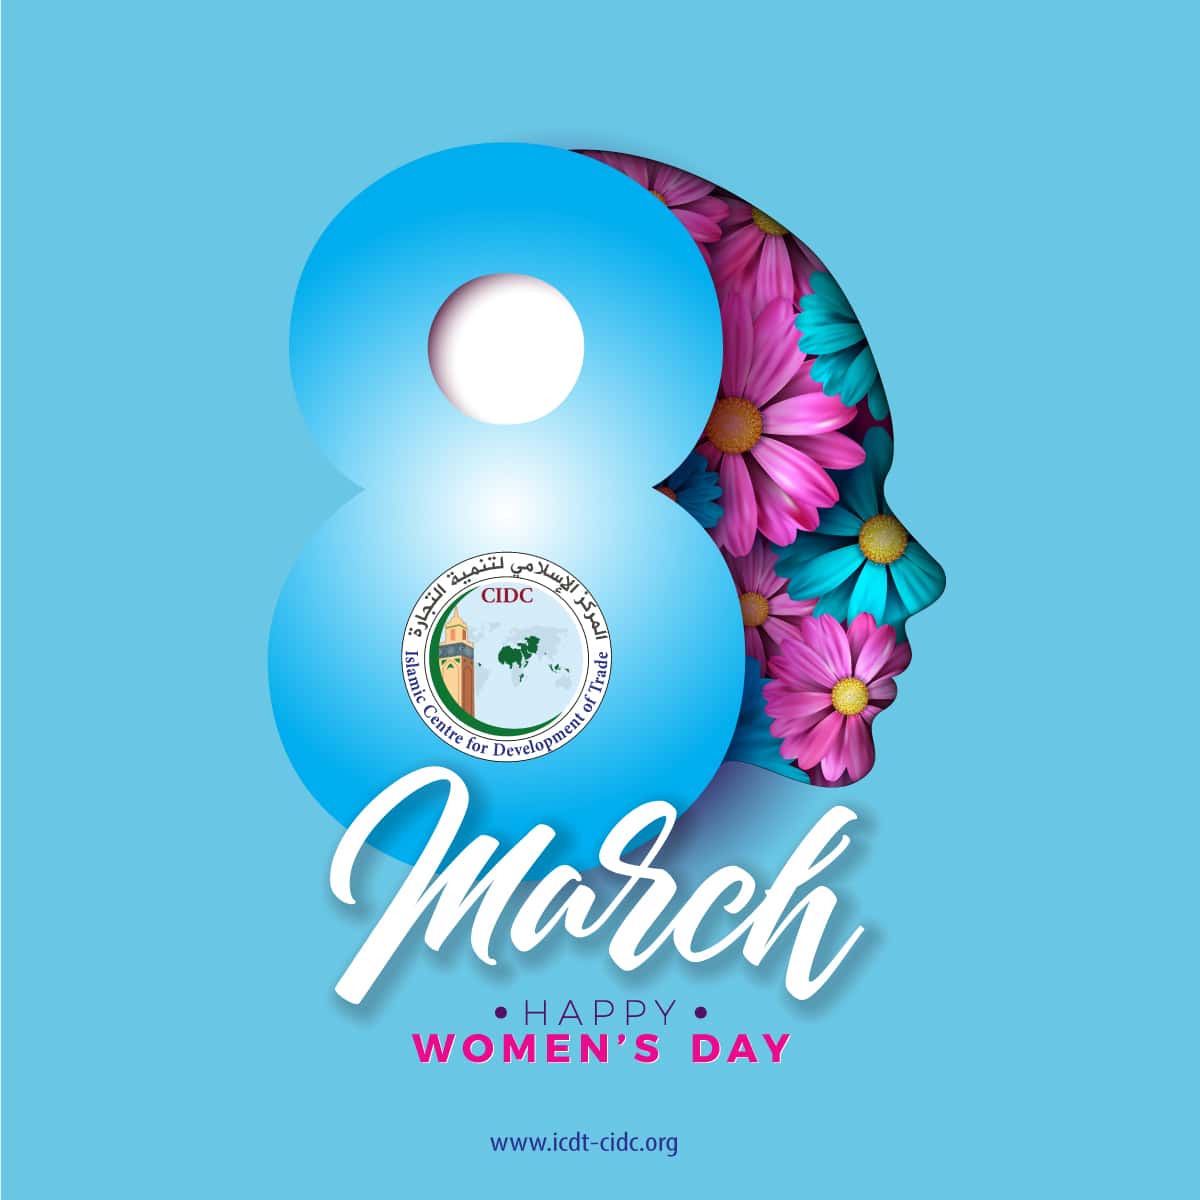 Celebrating International Women’s Day at ICDT